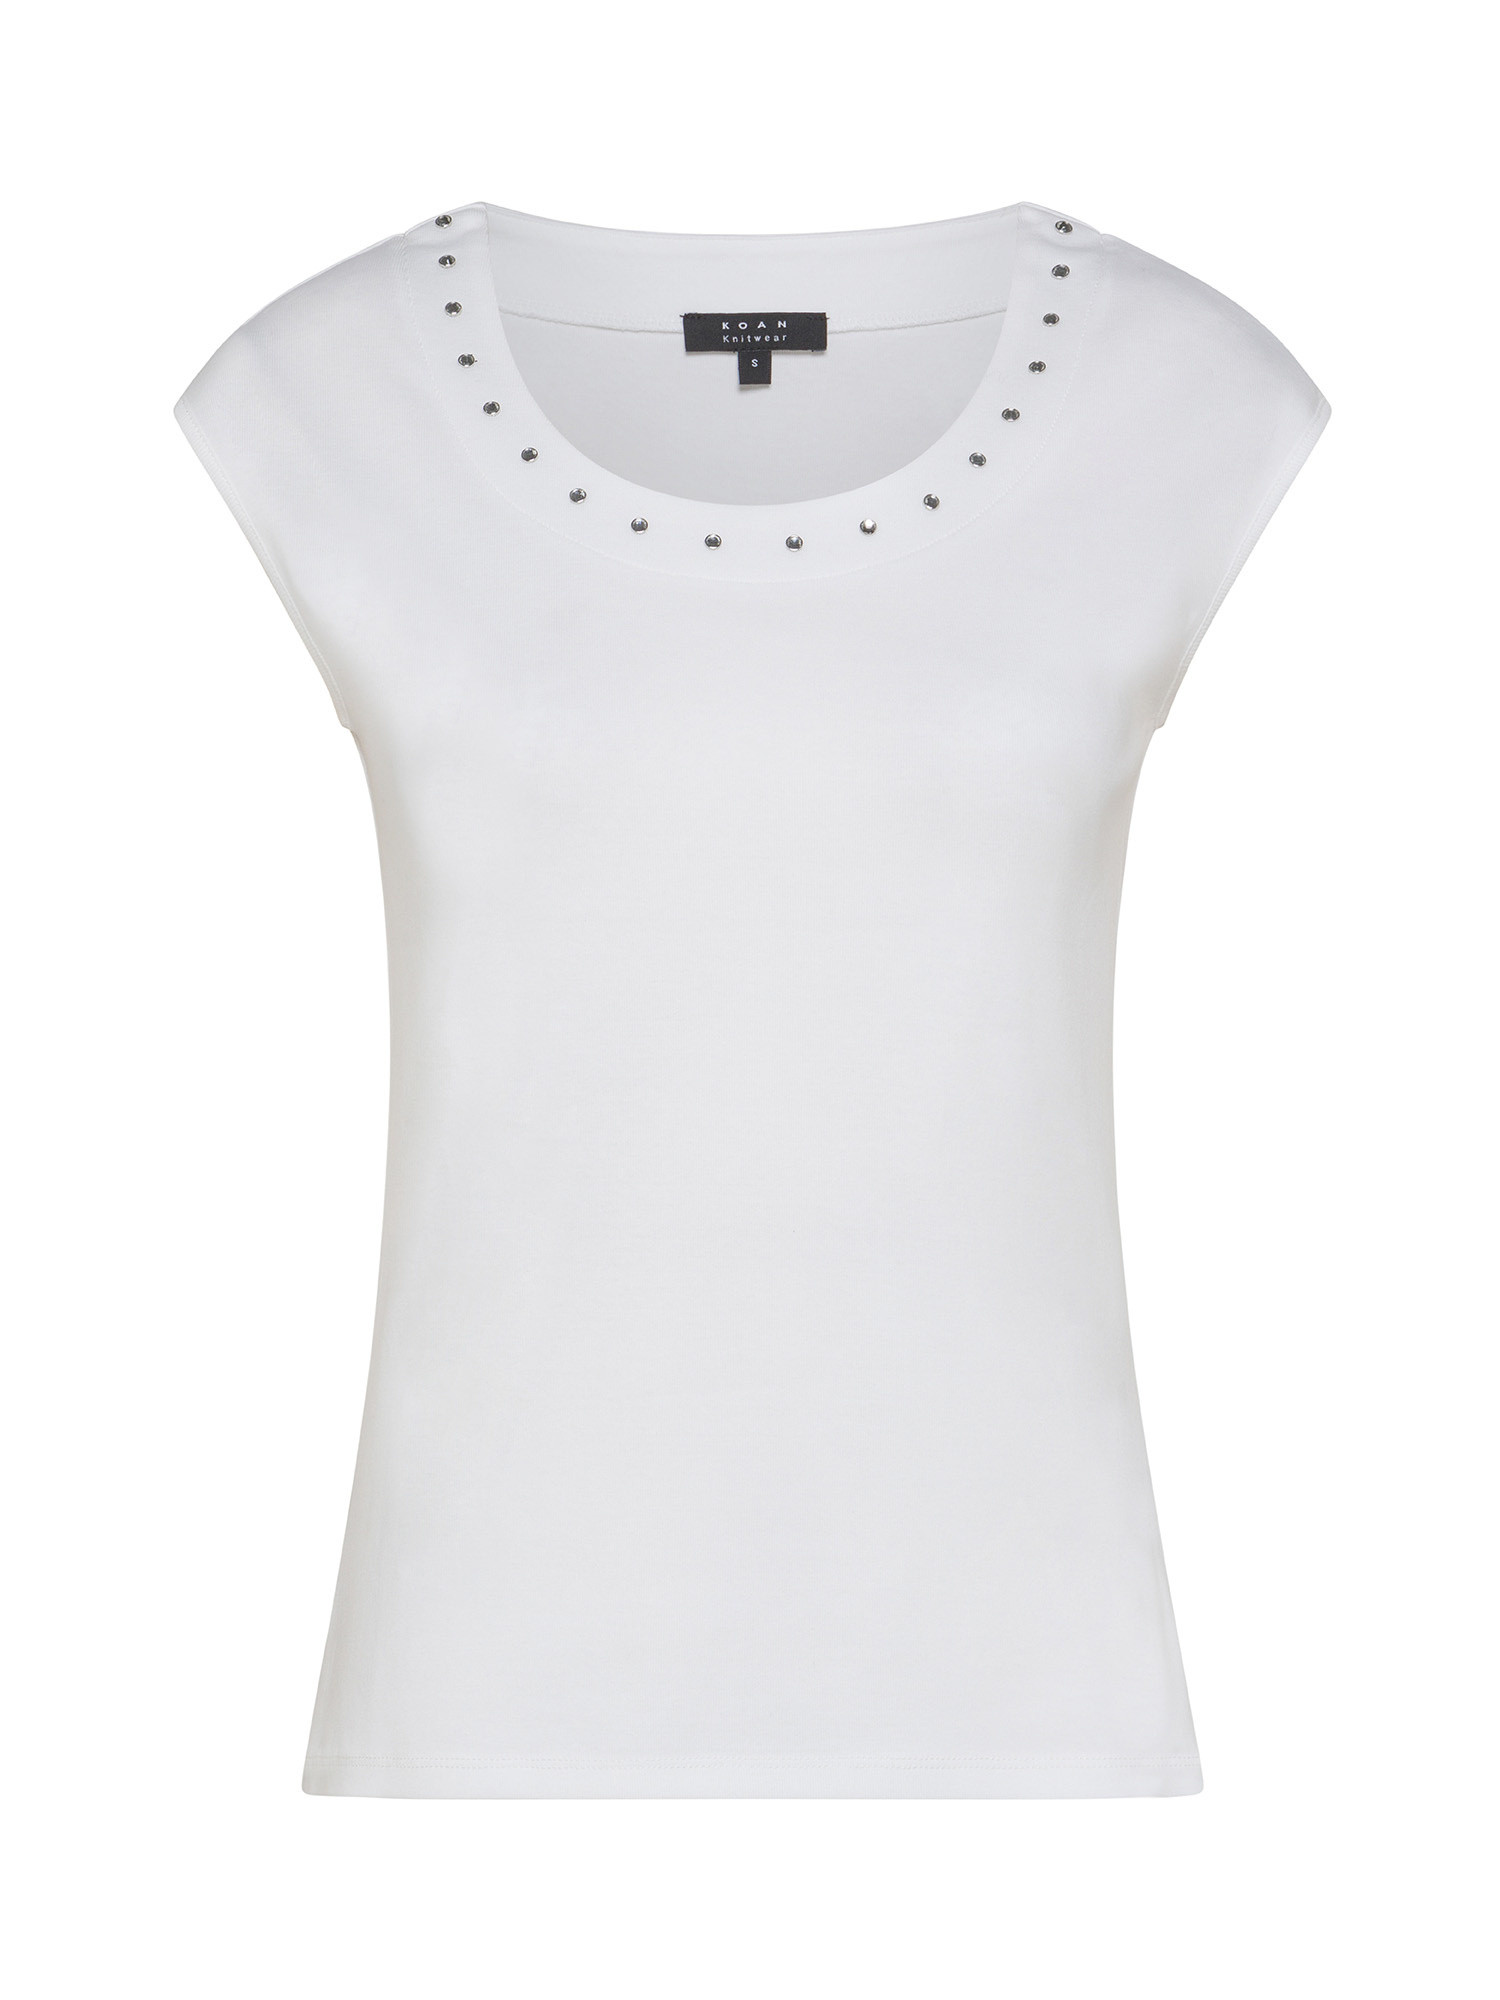 Koan - T-shirt in cotone con borchiette, Bianco, large image number 0